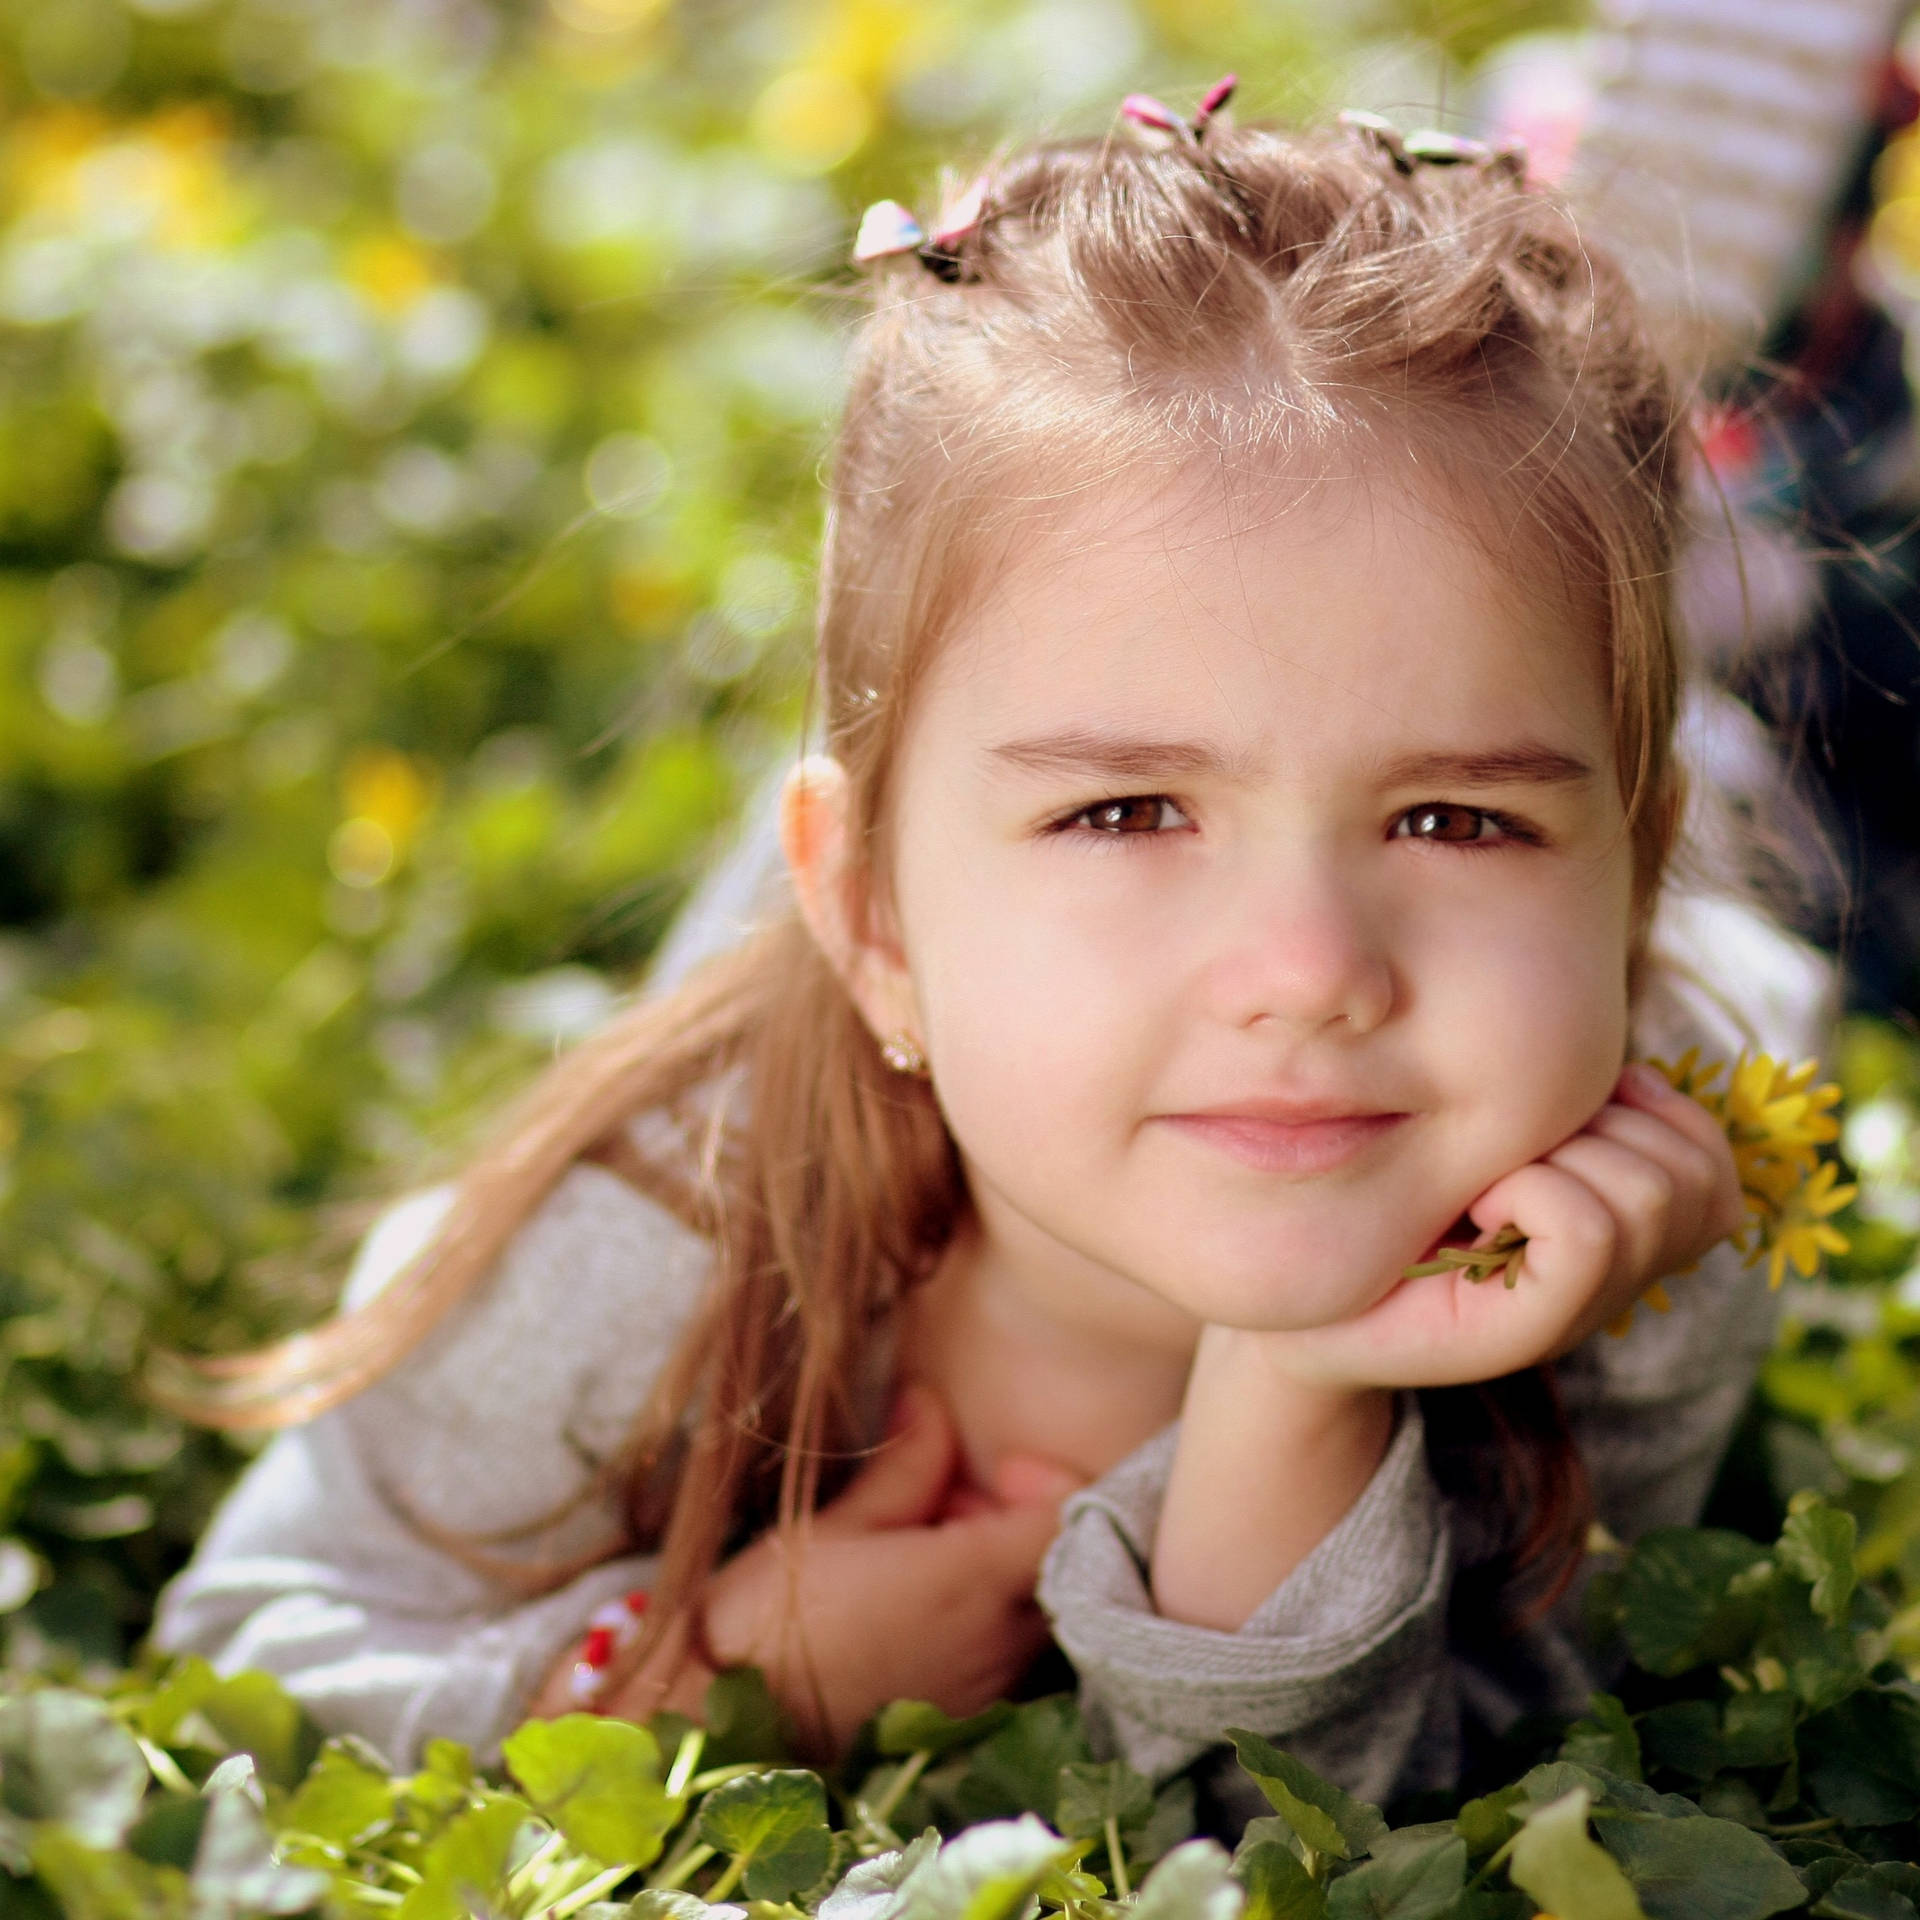 Girl Child On Grass Field Photoshoot Wallpaper